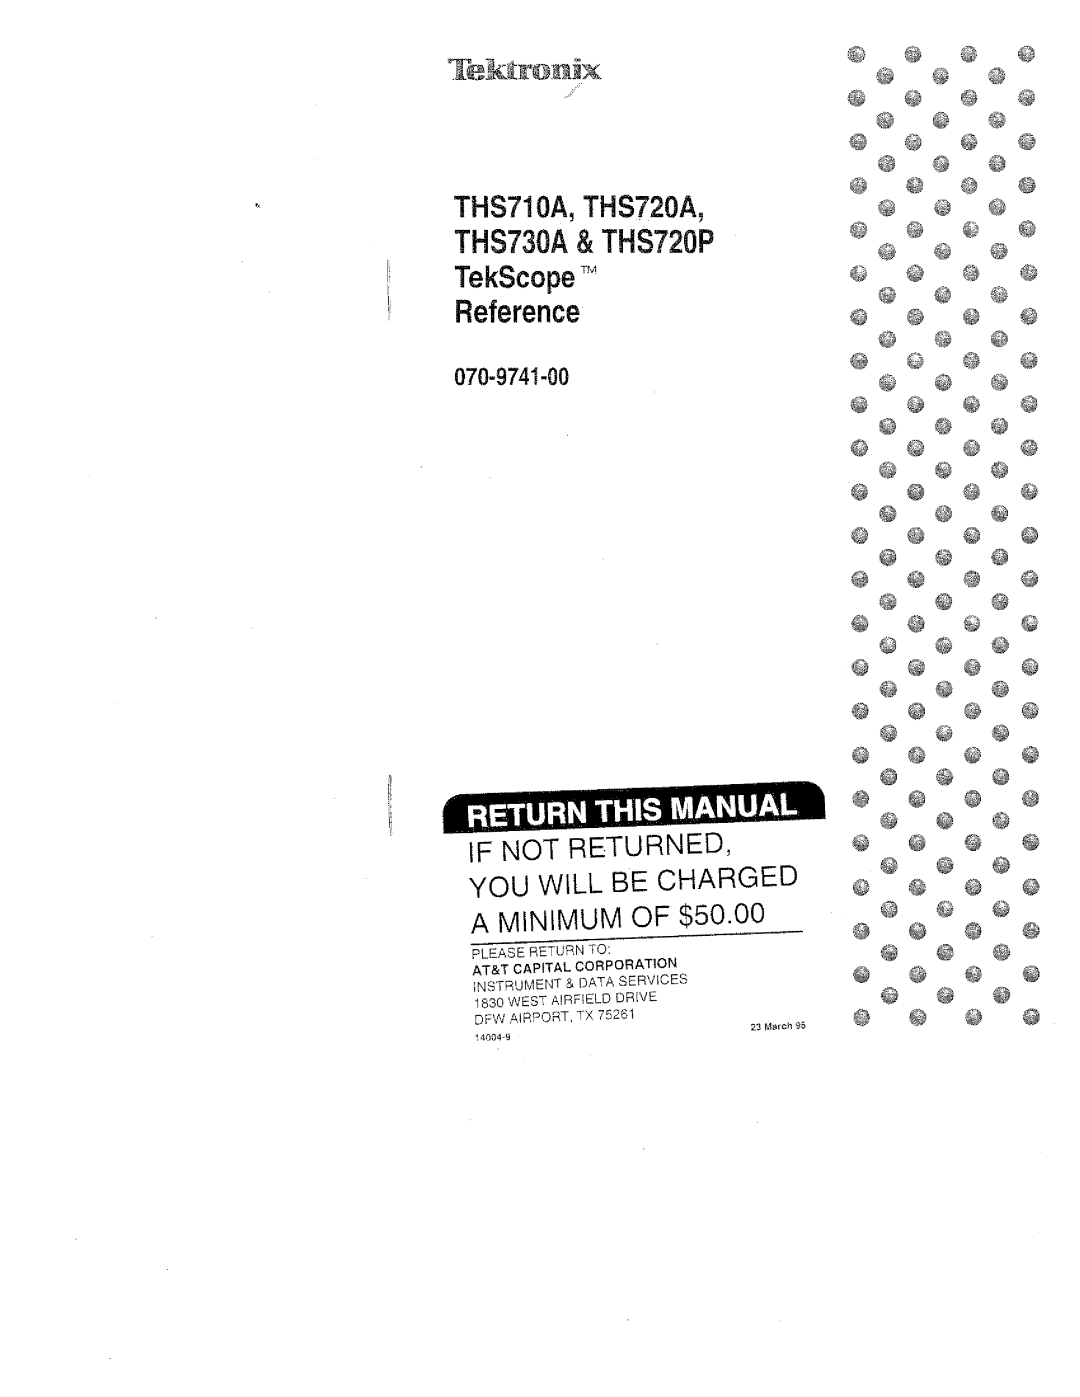 Tektronix THS720P, THS710A, THS730A, THS720A manual 